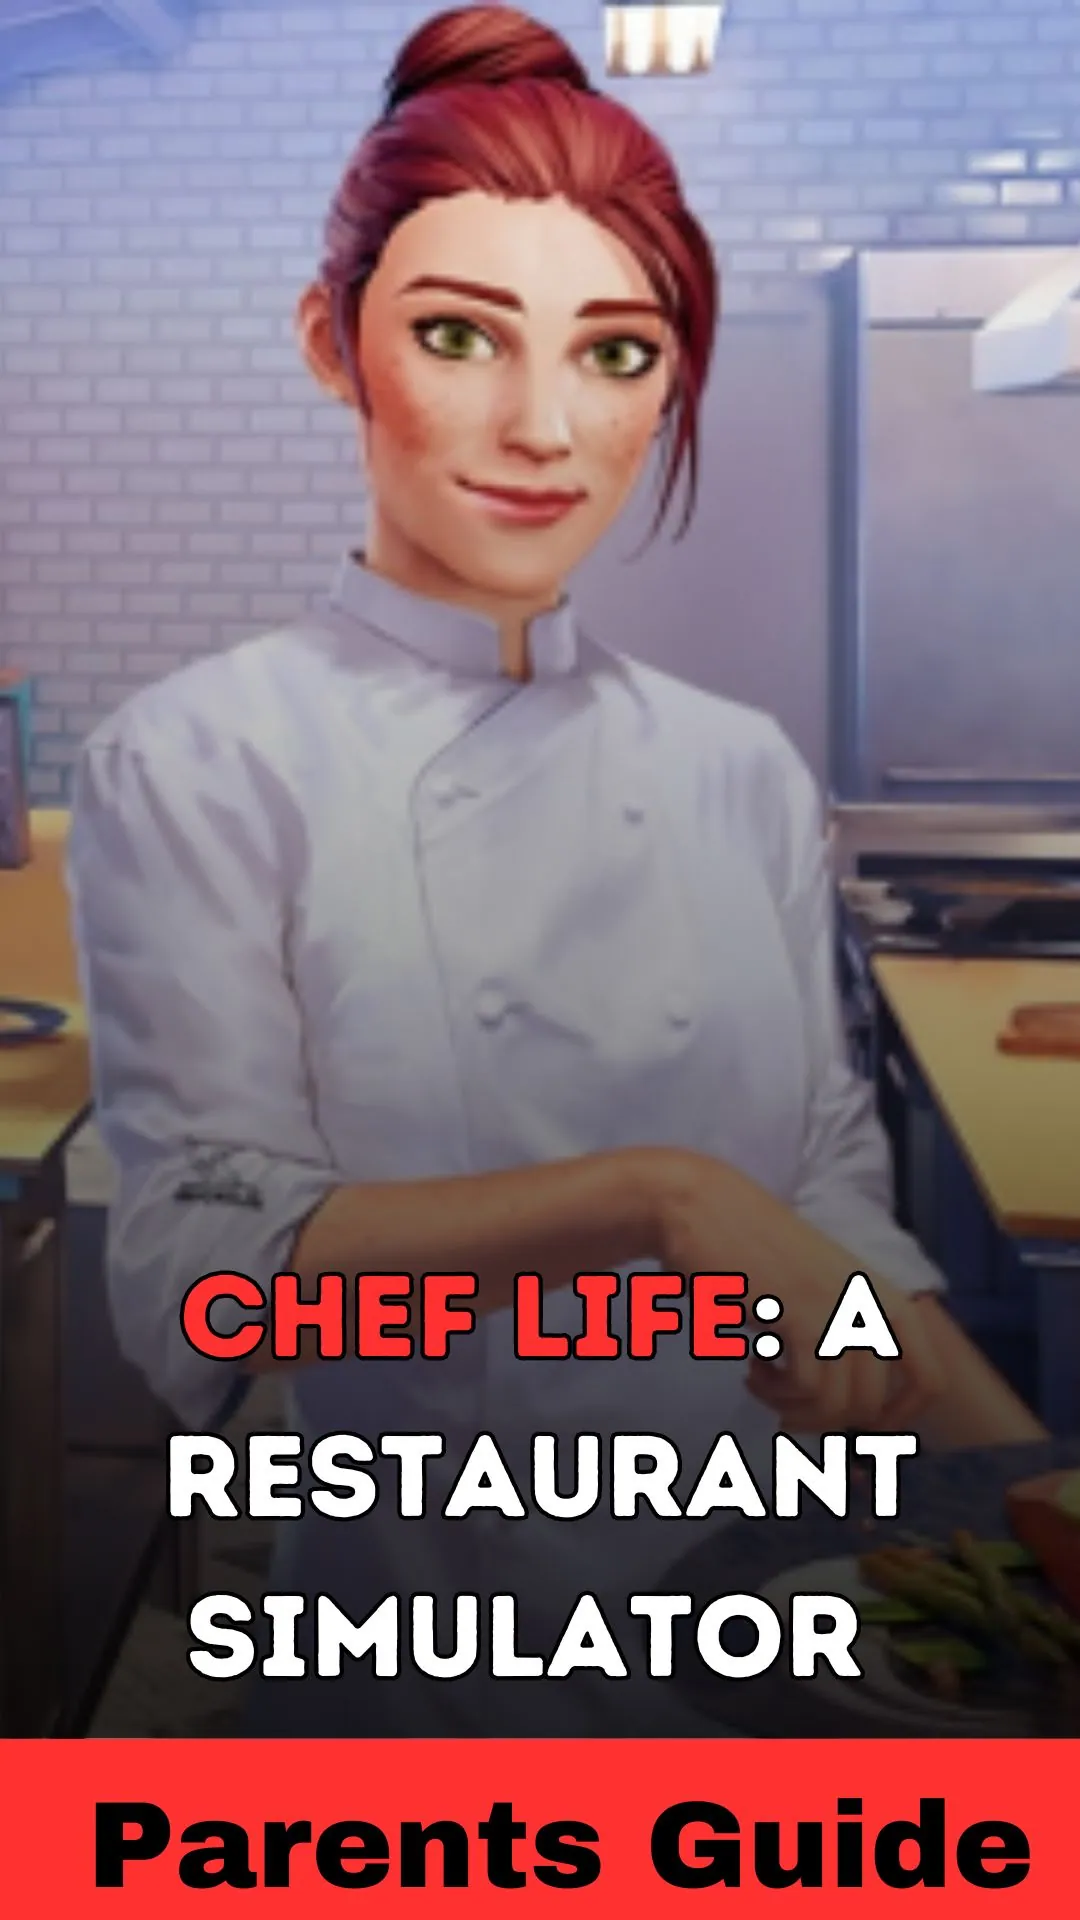 Chef Life: A Restaurant Simulator Parents Guide (1)